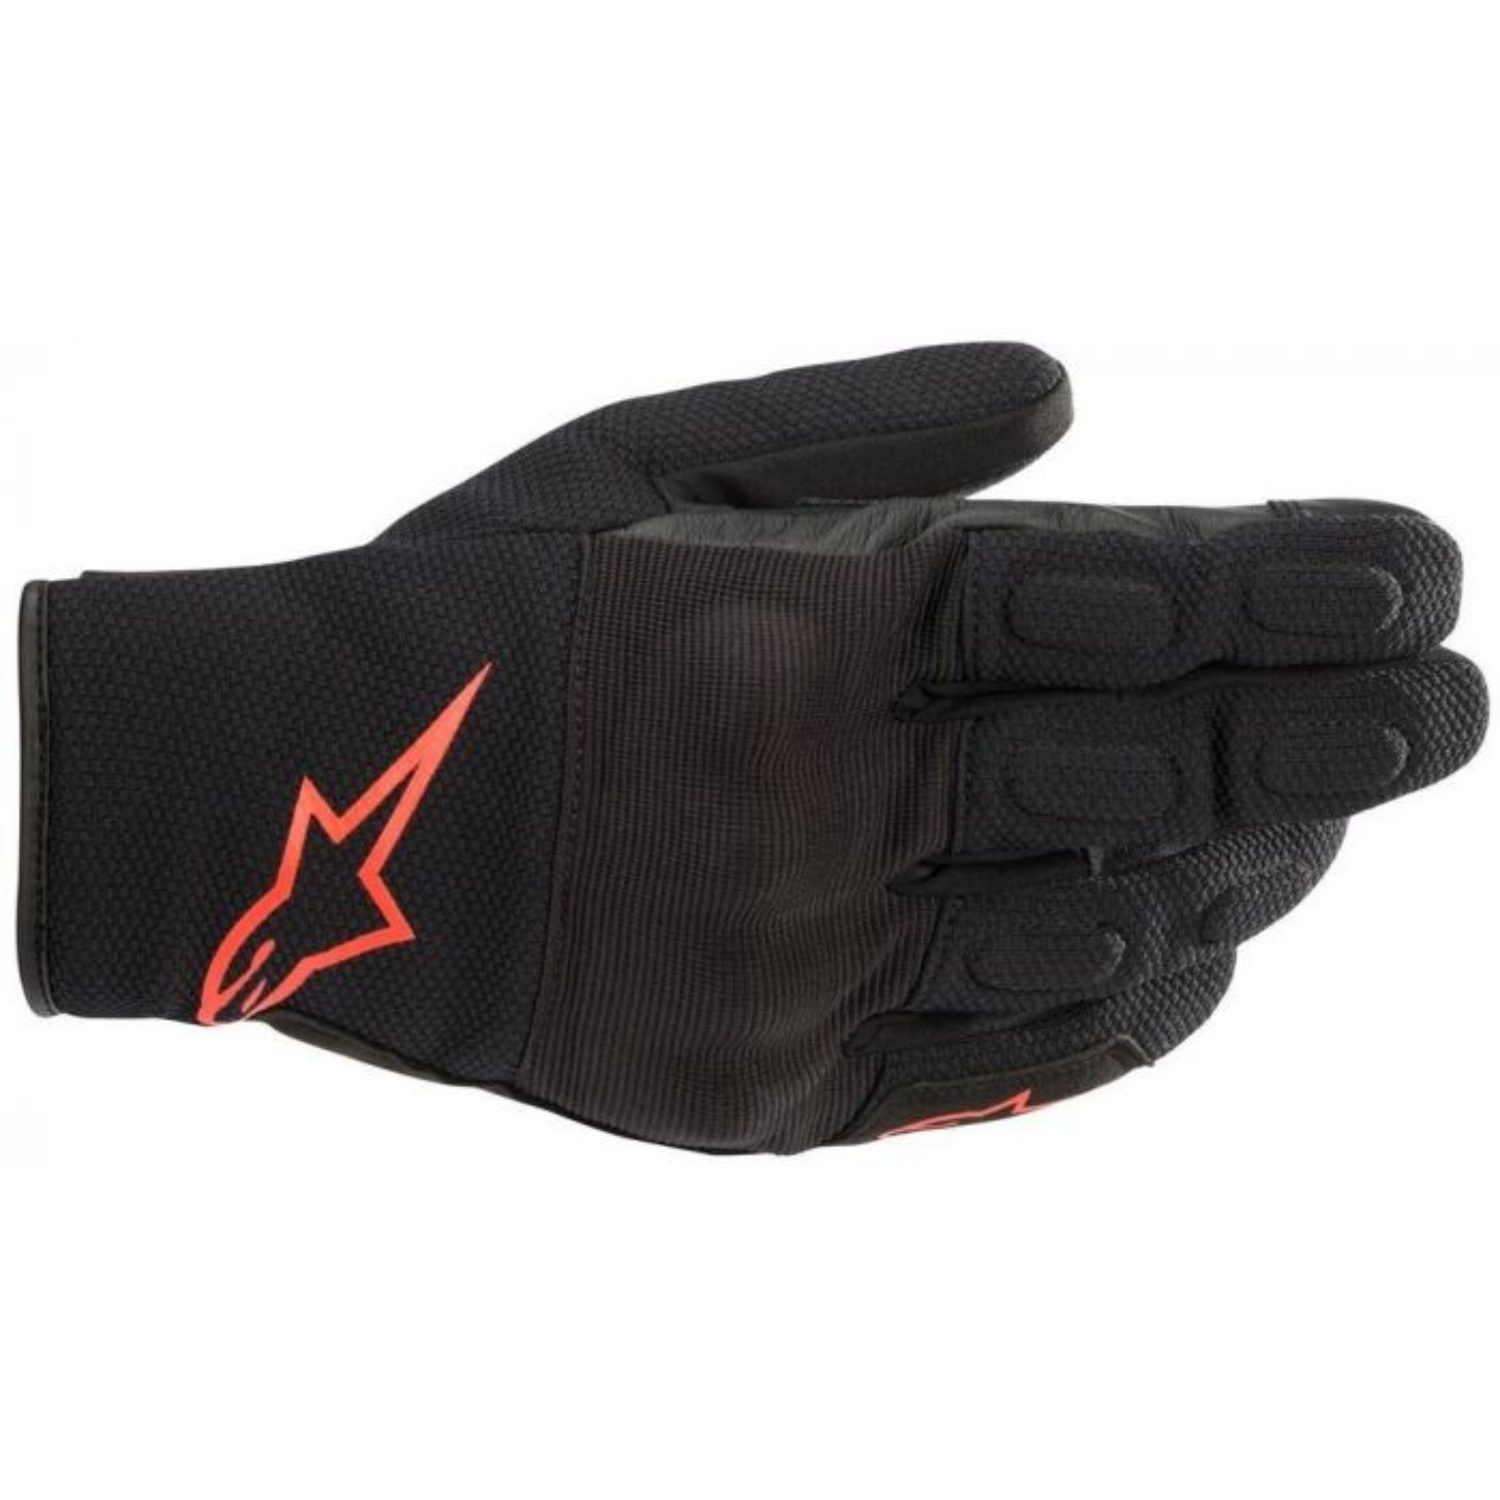 Image of Alpinestars S Max Drystar Gloves Black Red Fluo Size M EN